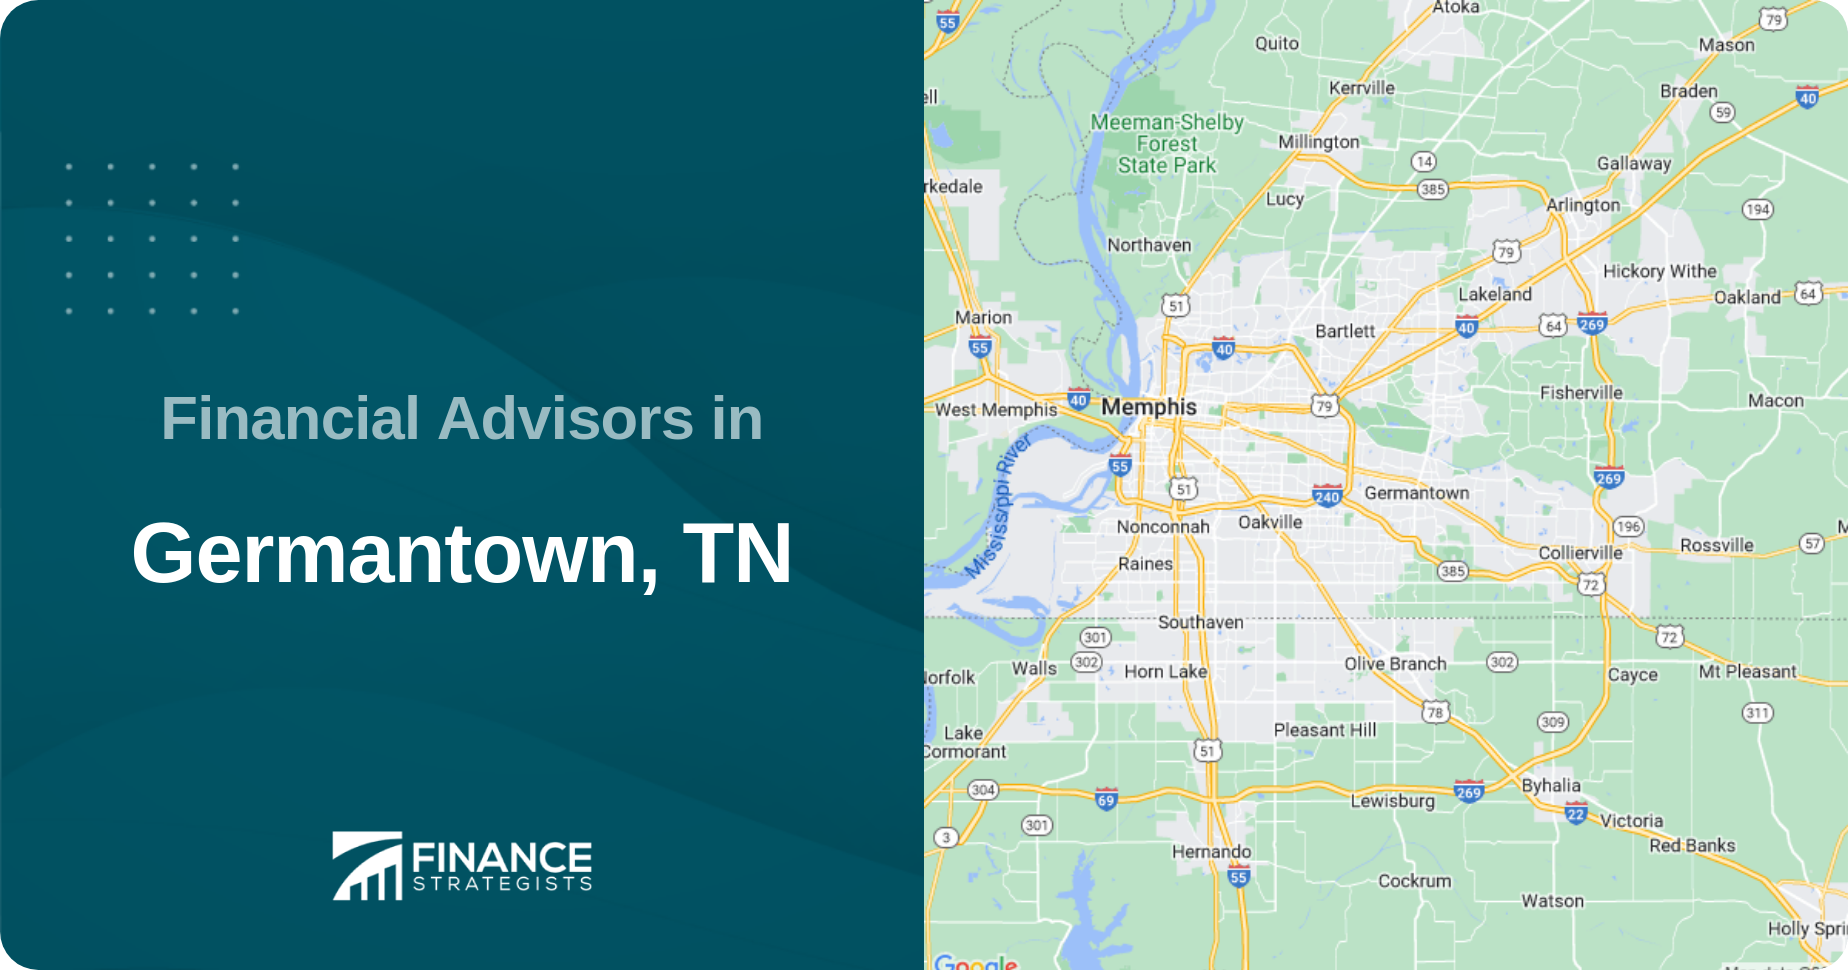 Financial Advisors in Germantown, TN